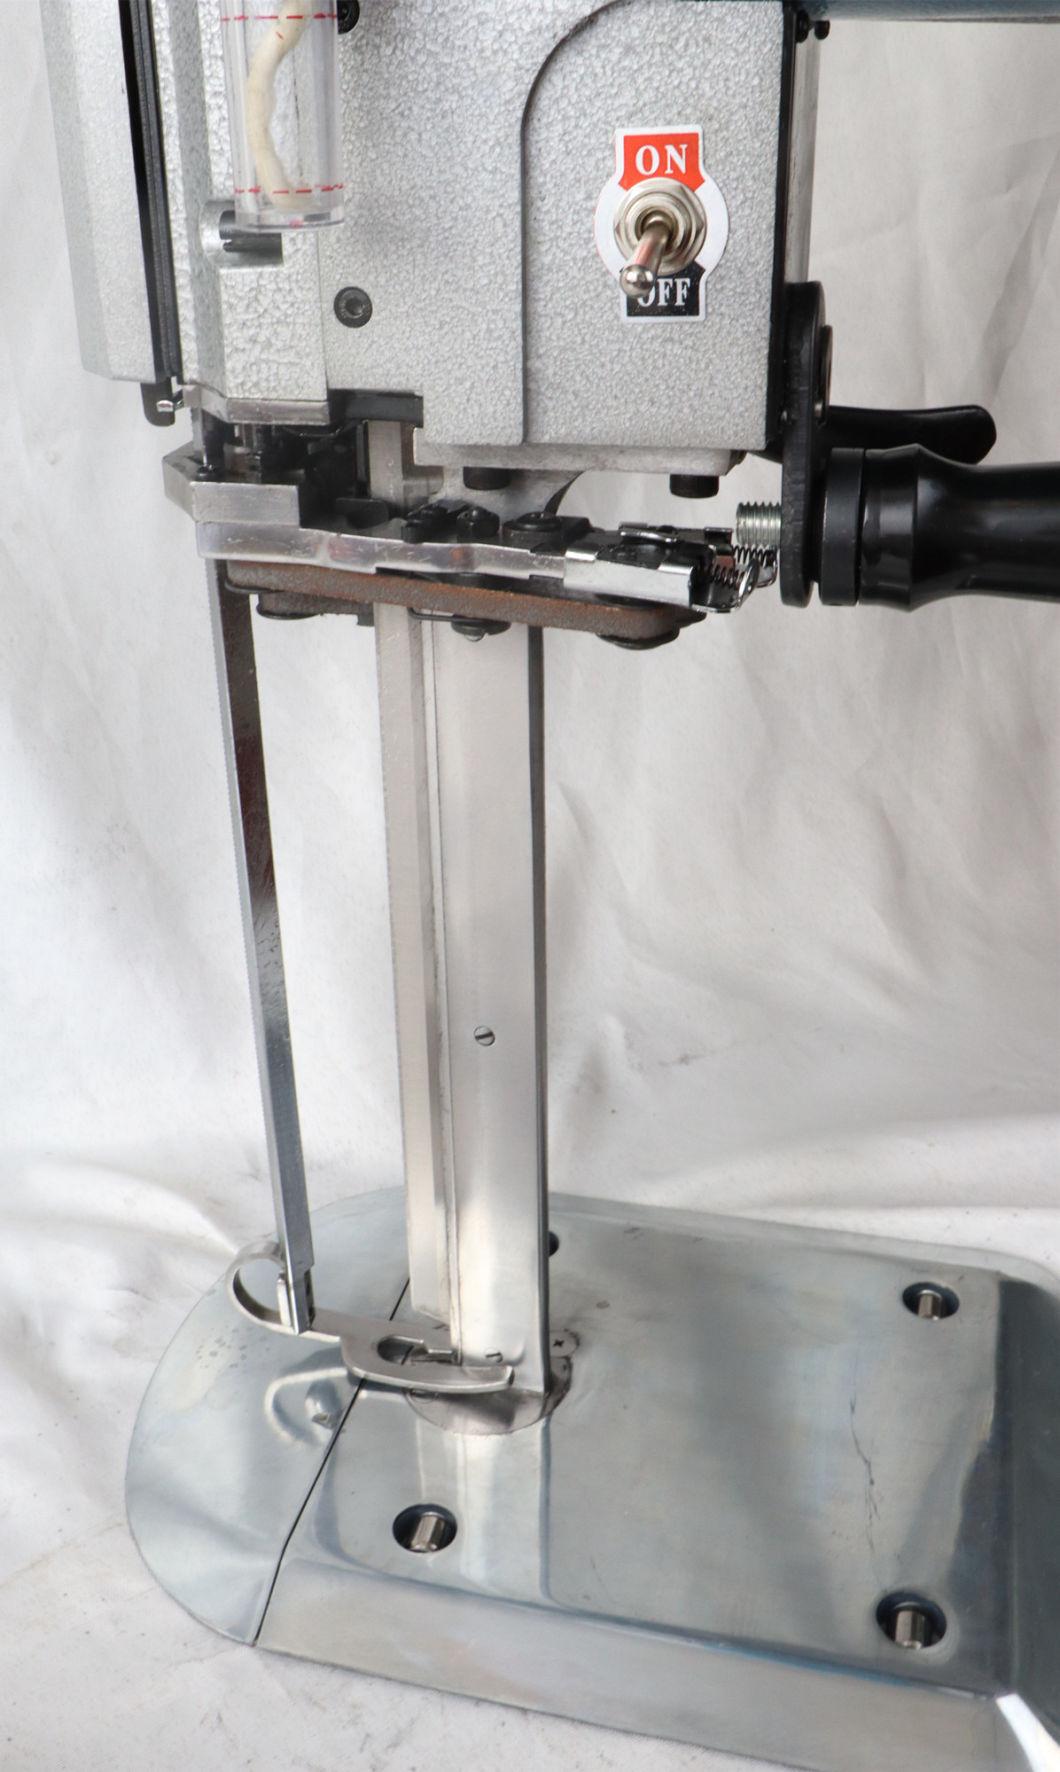 Auto-Sharpening Cutting Machine Series Fit T103/T3